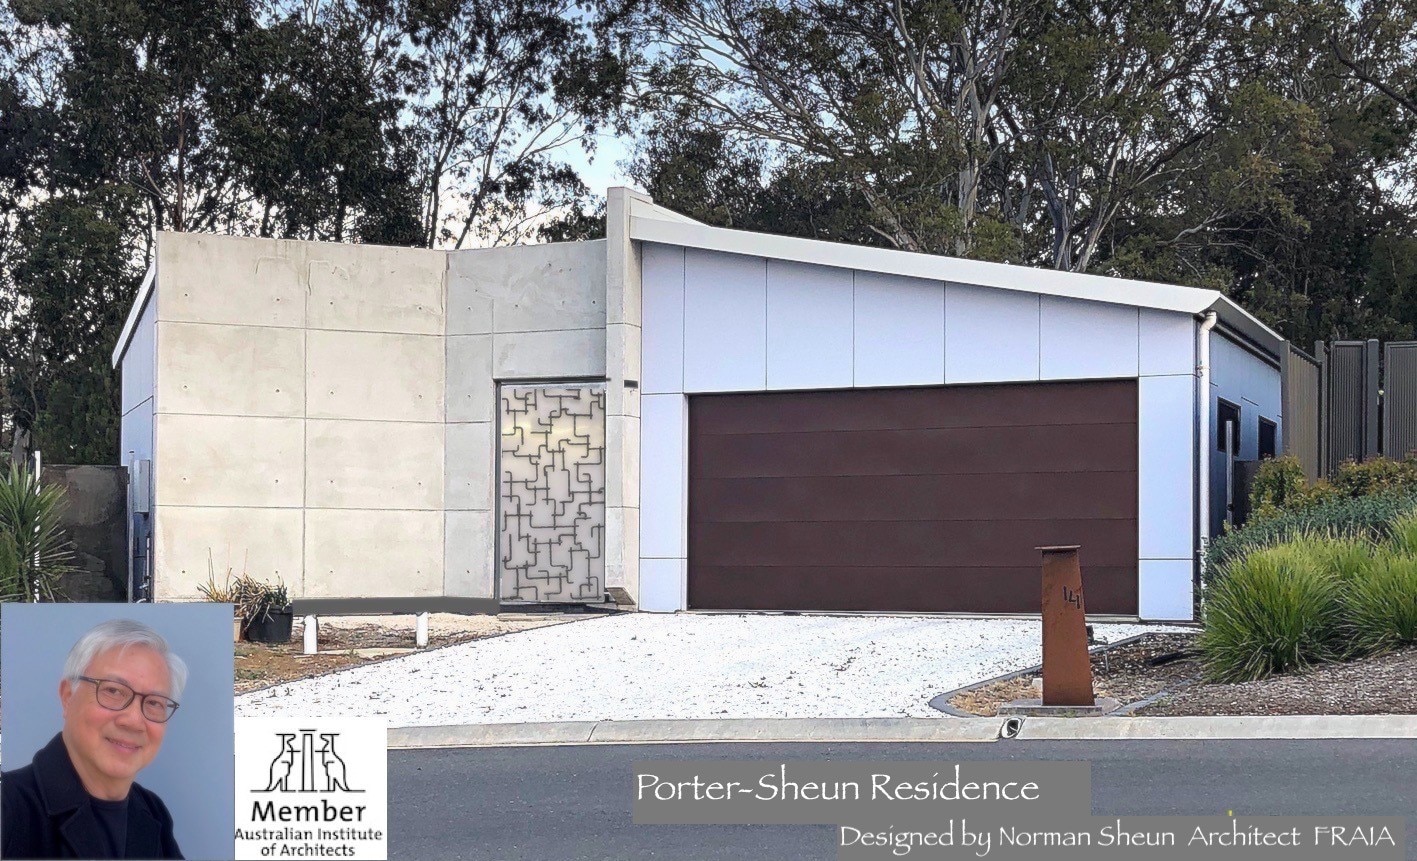 Porter-Sheun Residence is designed by Norman Sheun